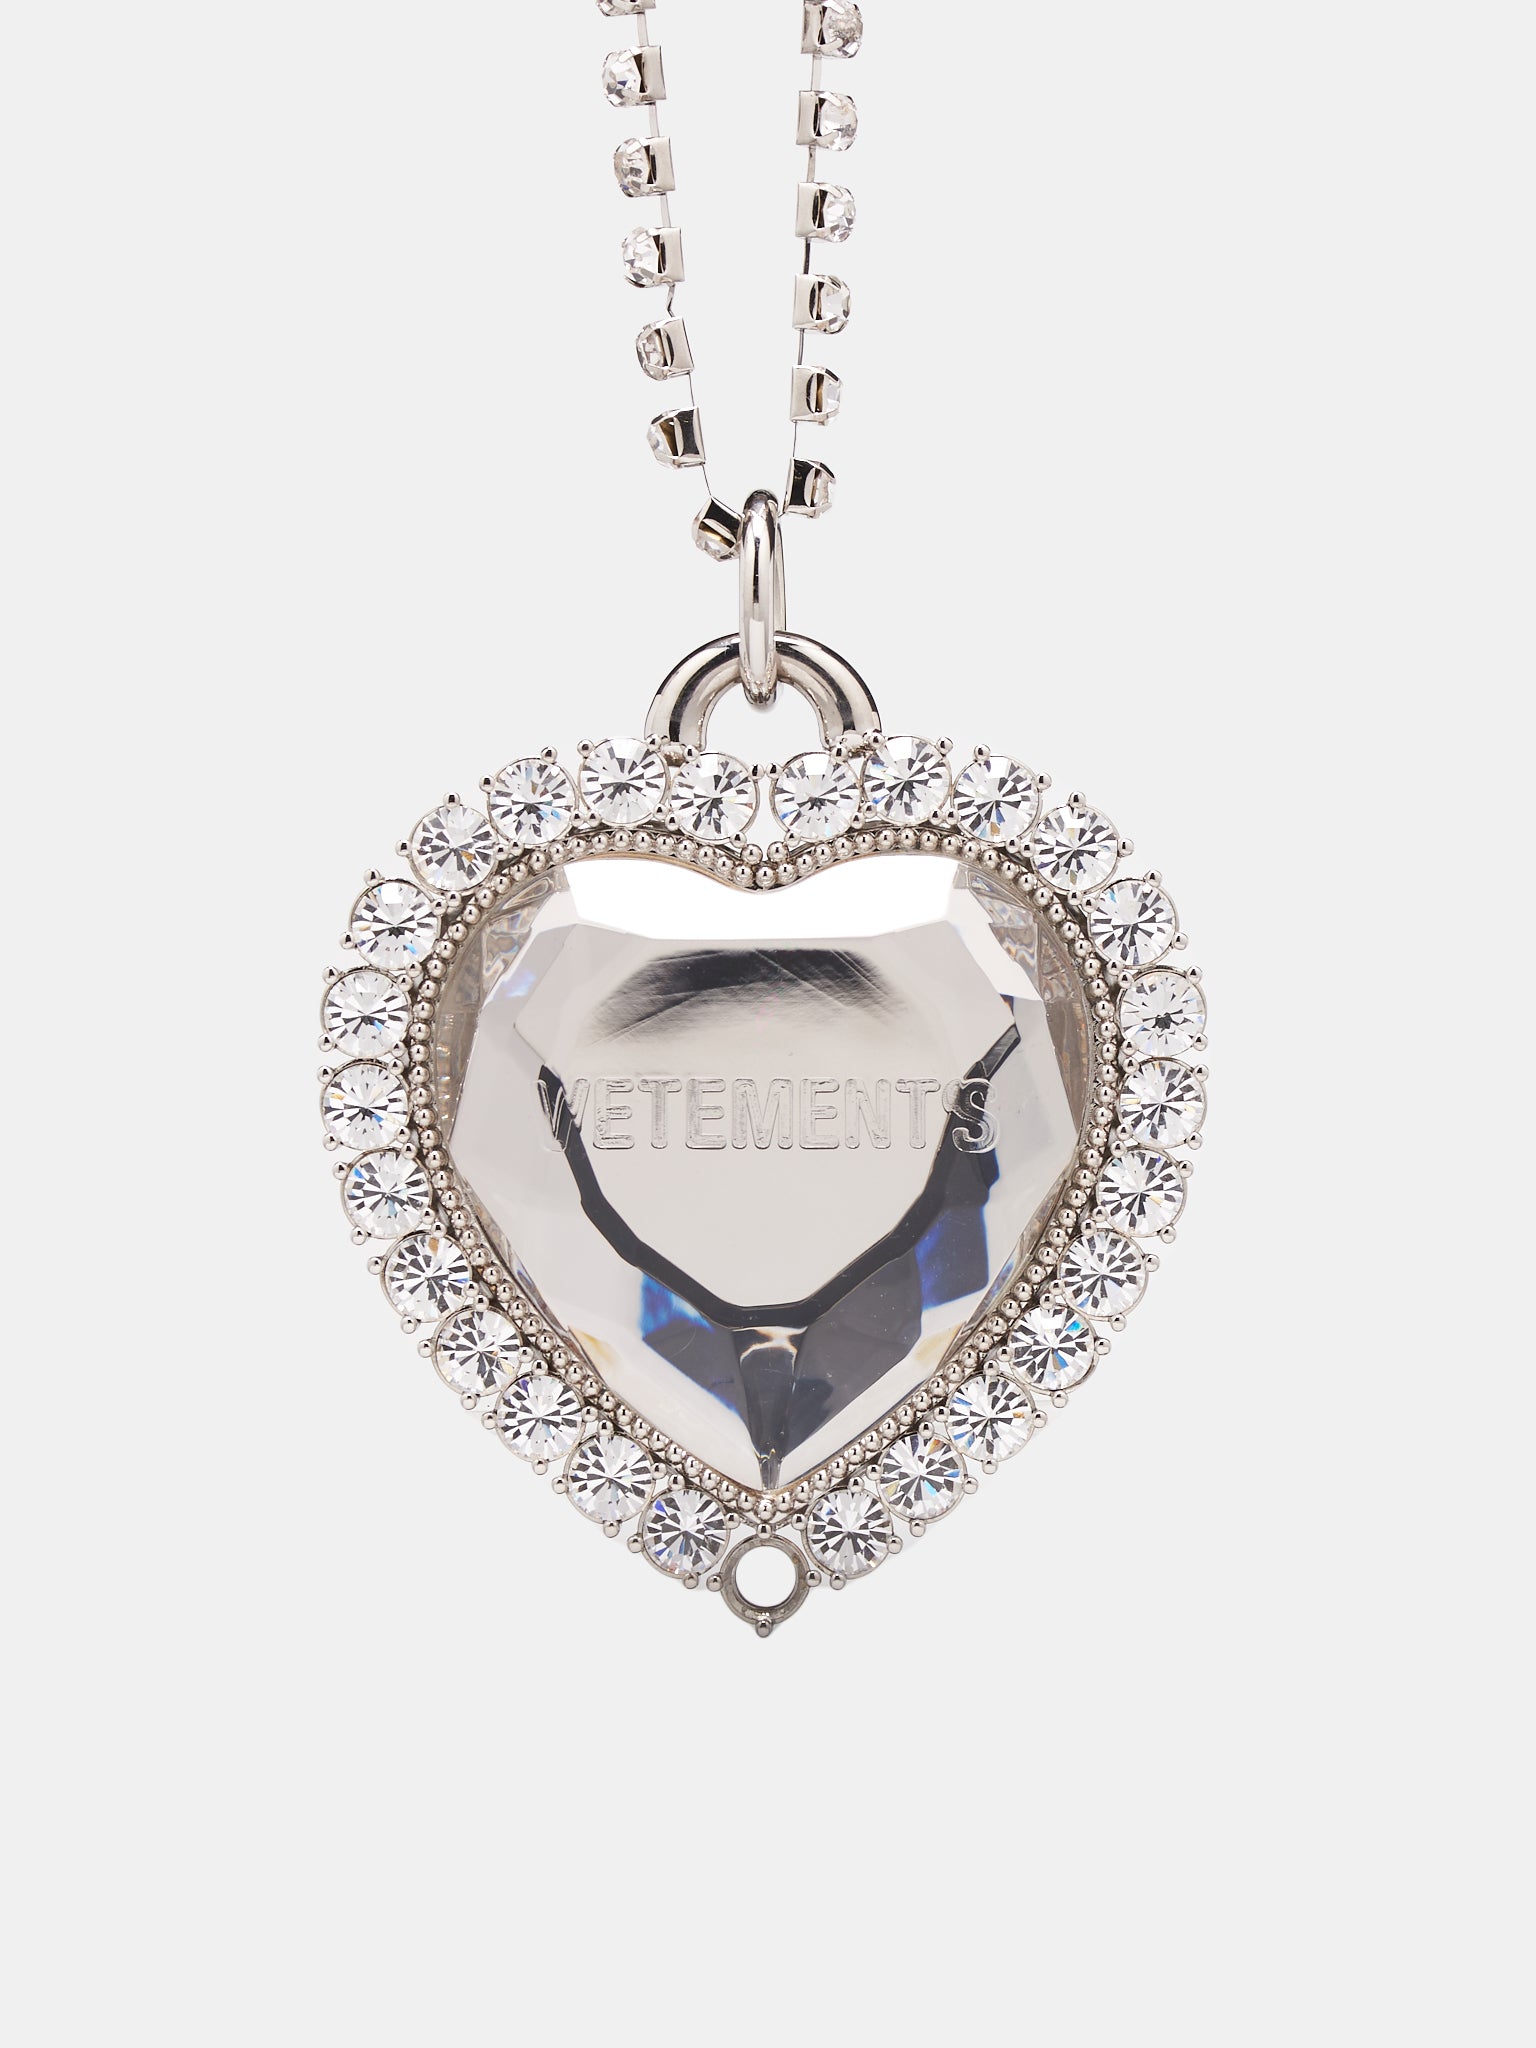 Giant Crystal Heart Necklace (UE64NE100W-CRYSTAL)